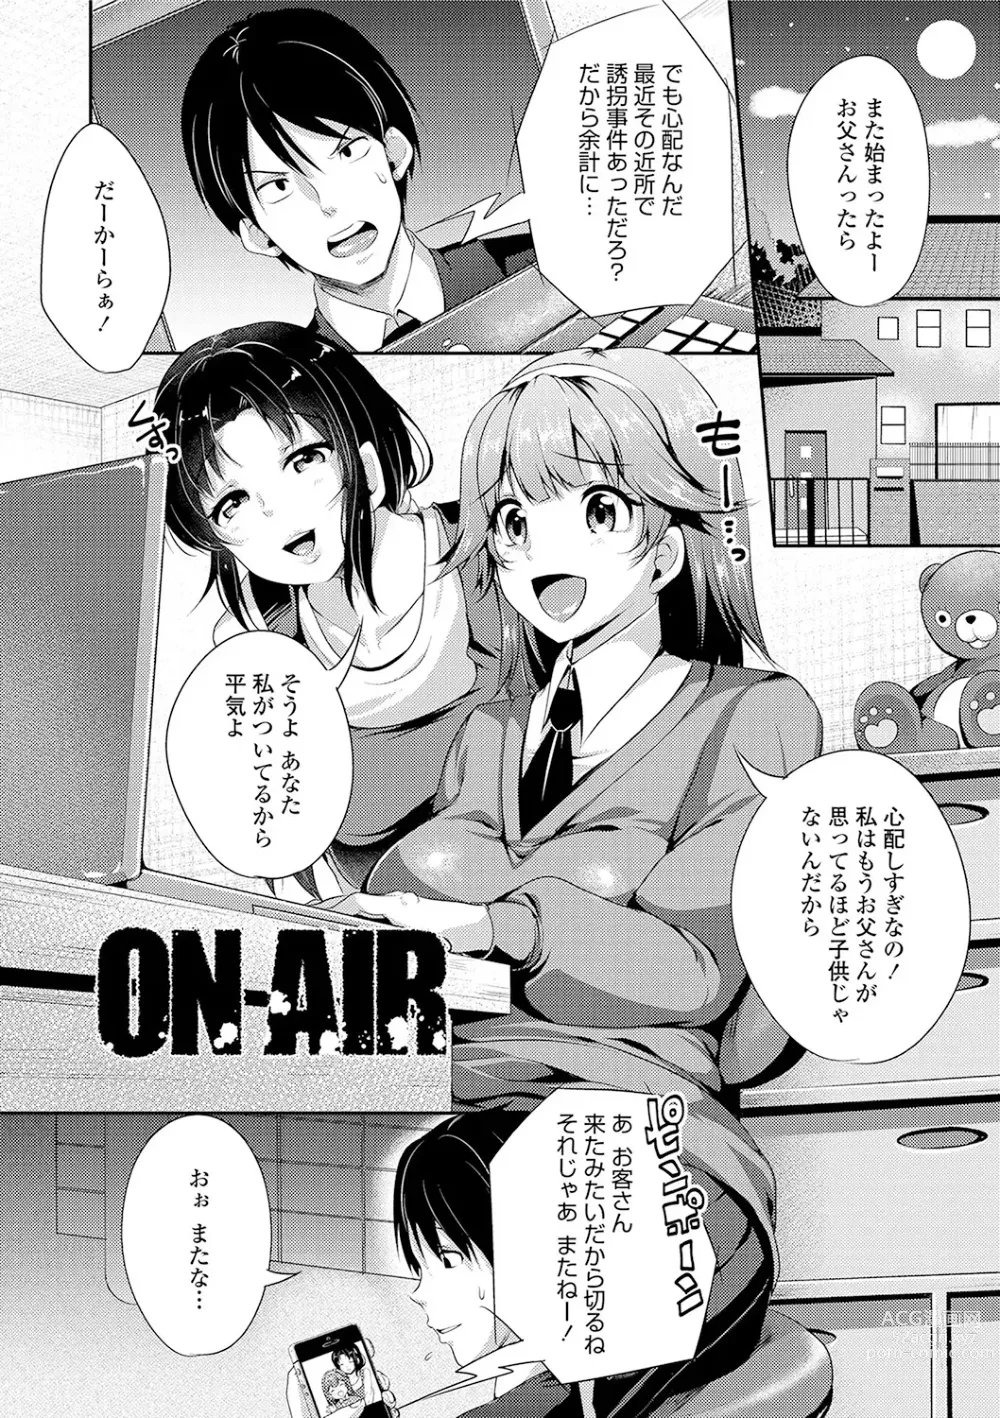 Page 6 of manga Kowashite Asobo + DLsite Gentei Chara Settei & Plot